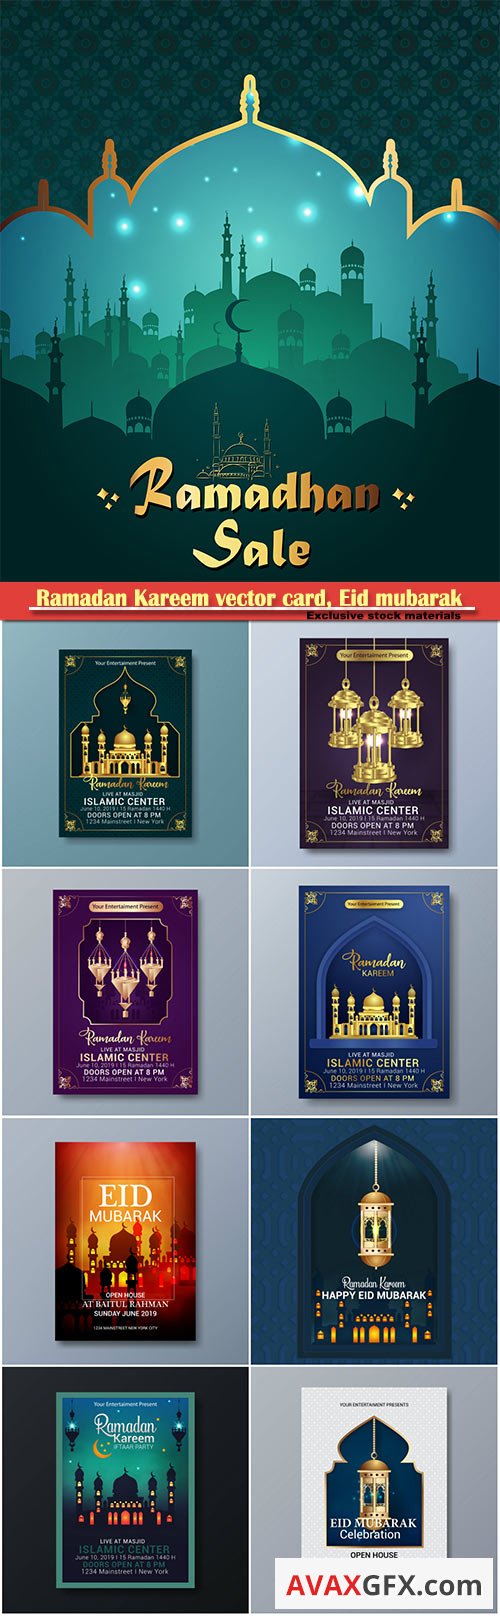 Ramadan Kareem vector card, Eid mubarak calligraphy design templates